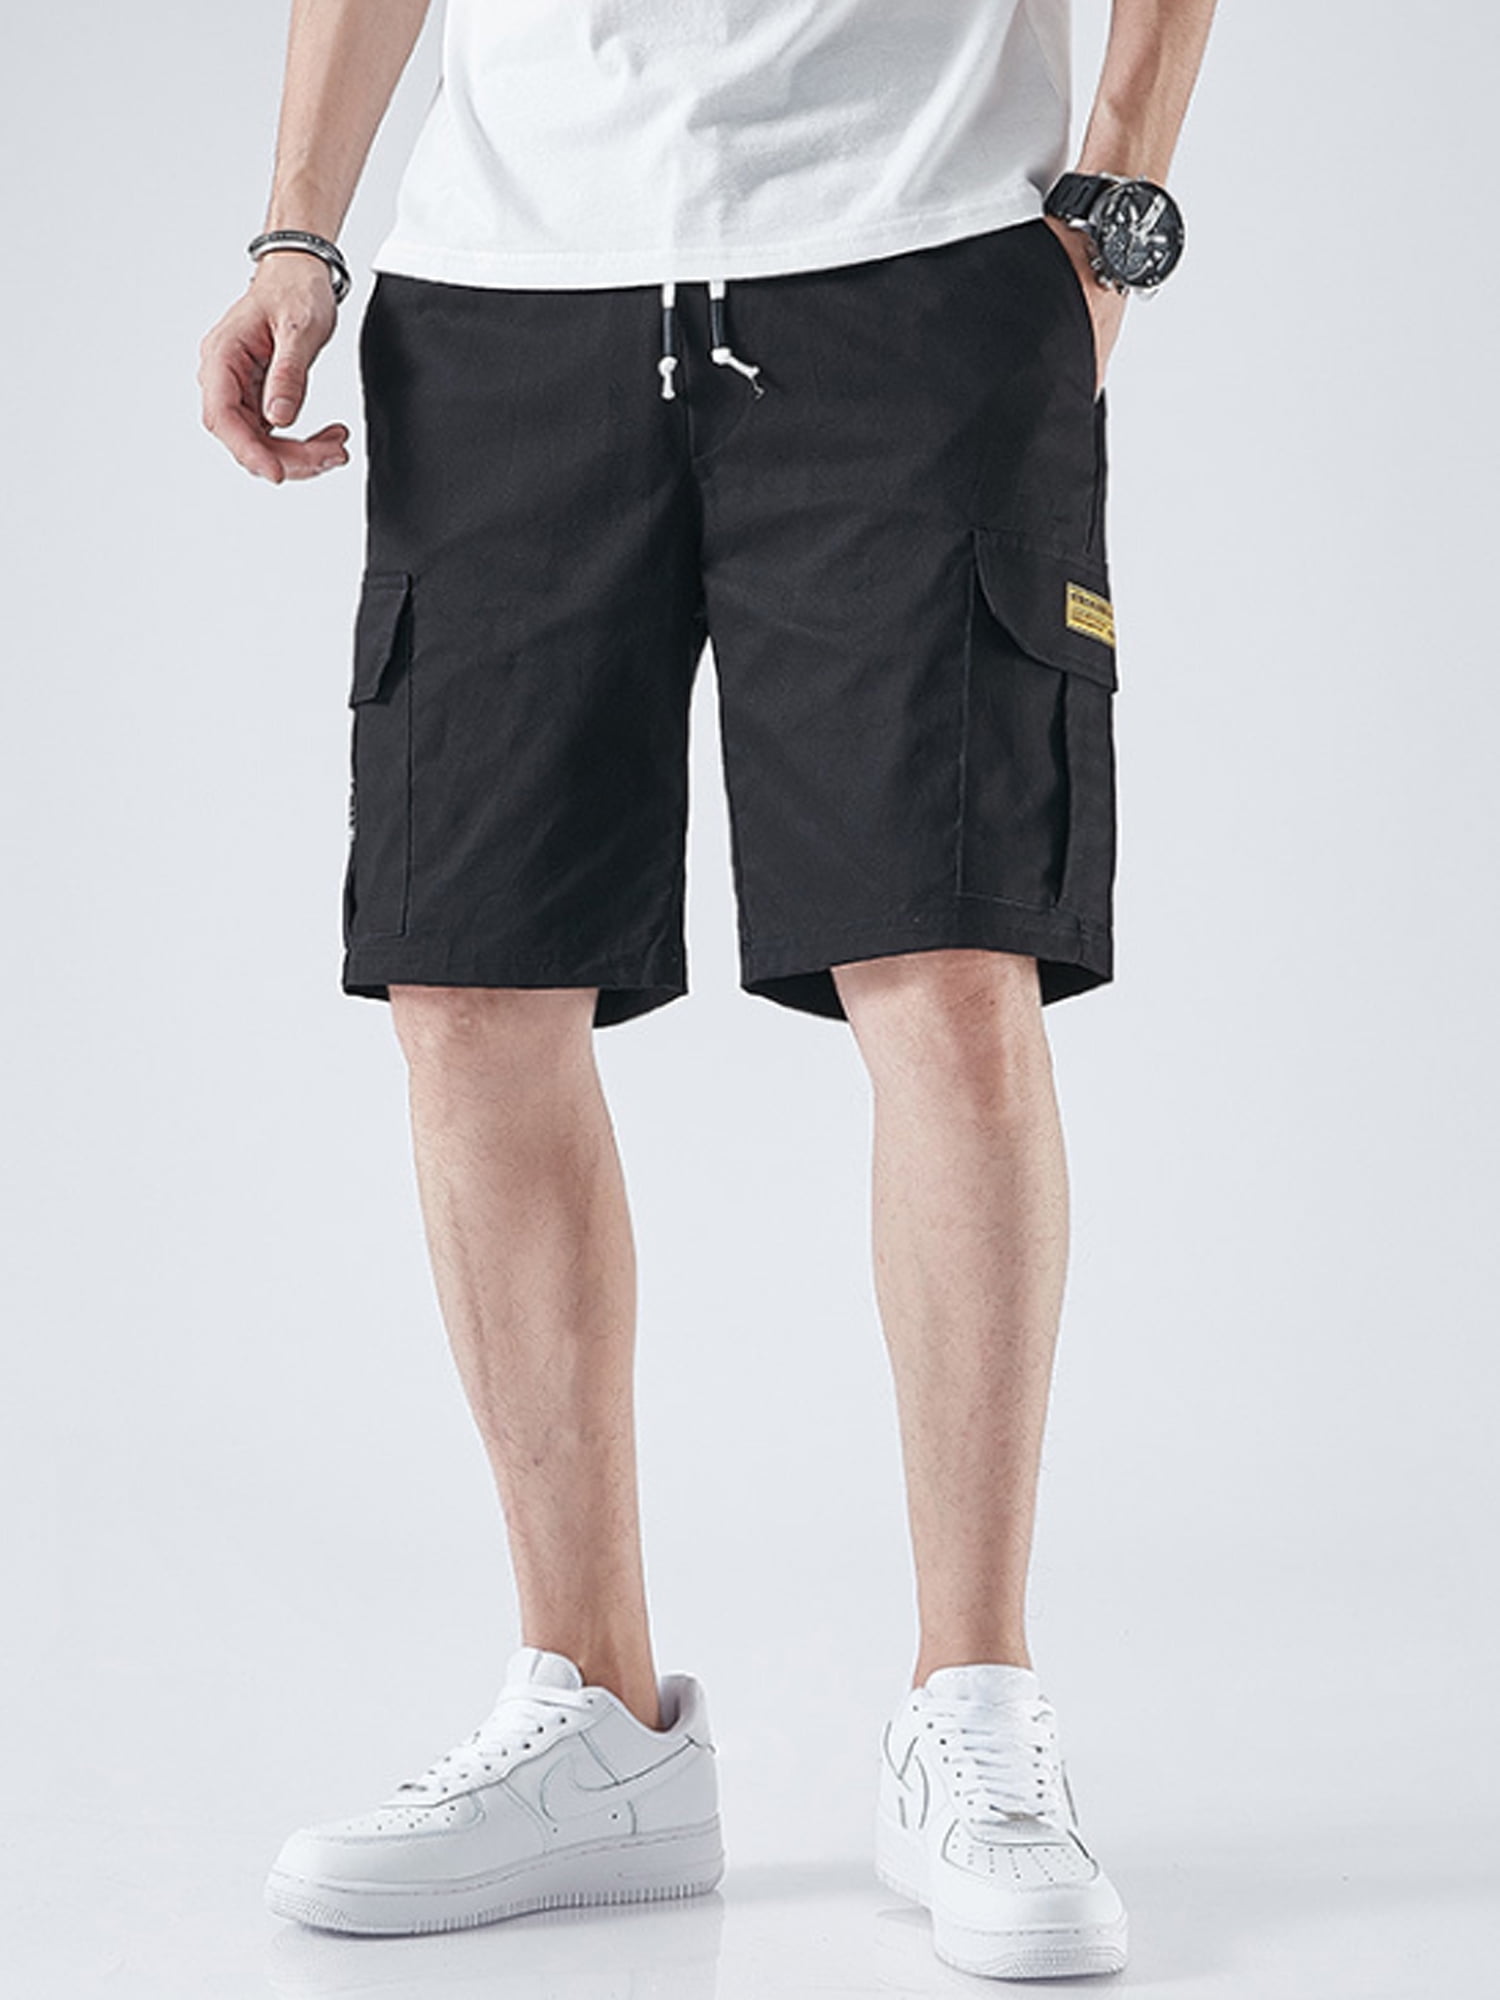 Mens Summer Casual Shorts Loose Multi-Pocket Cargo Shorts Pants Plus Size SP 